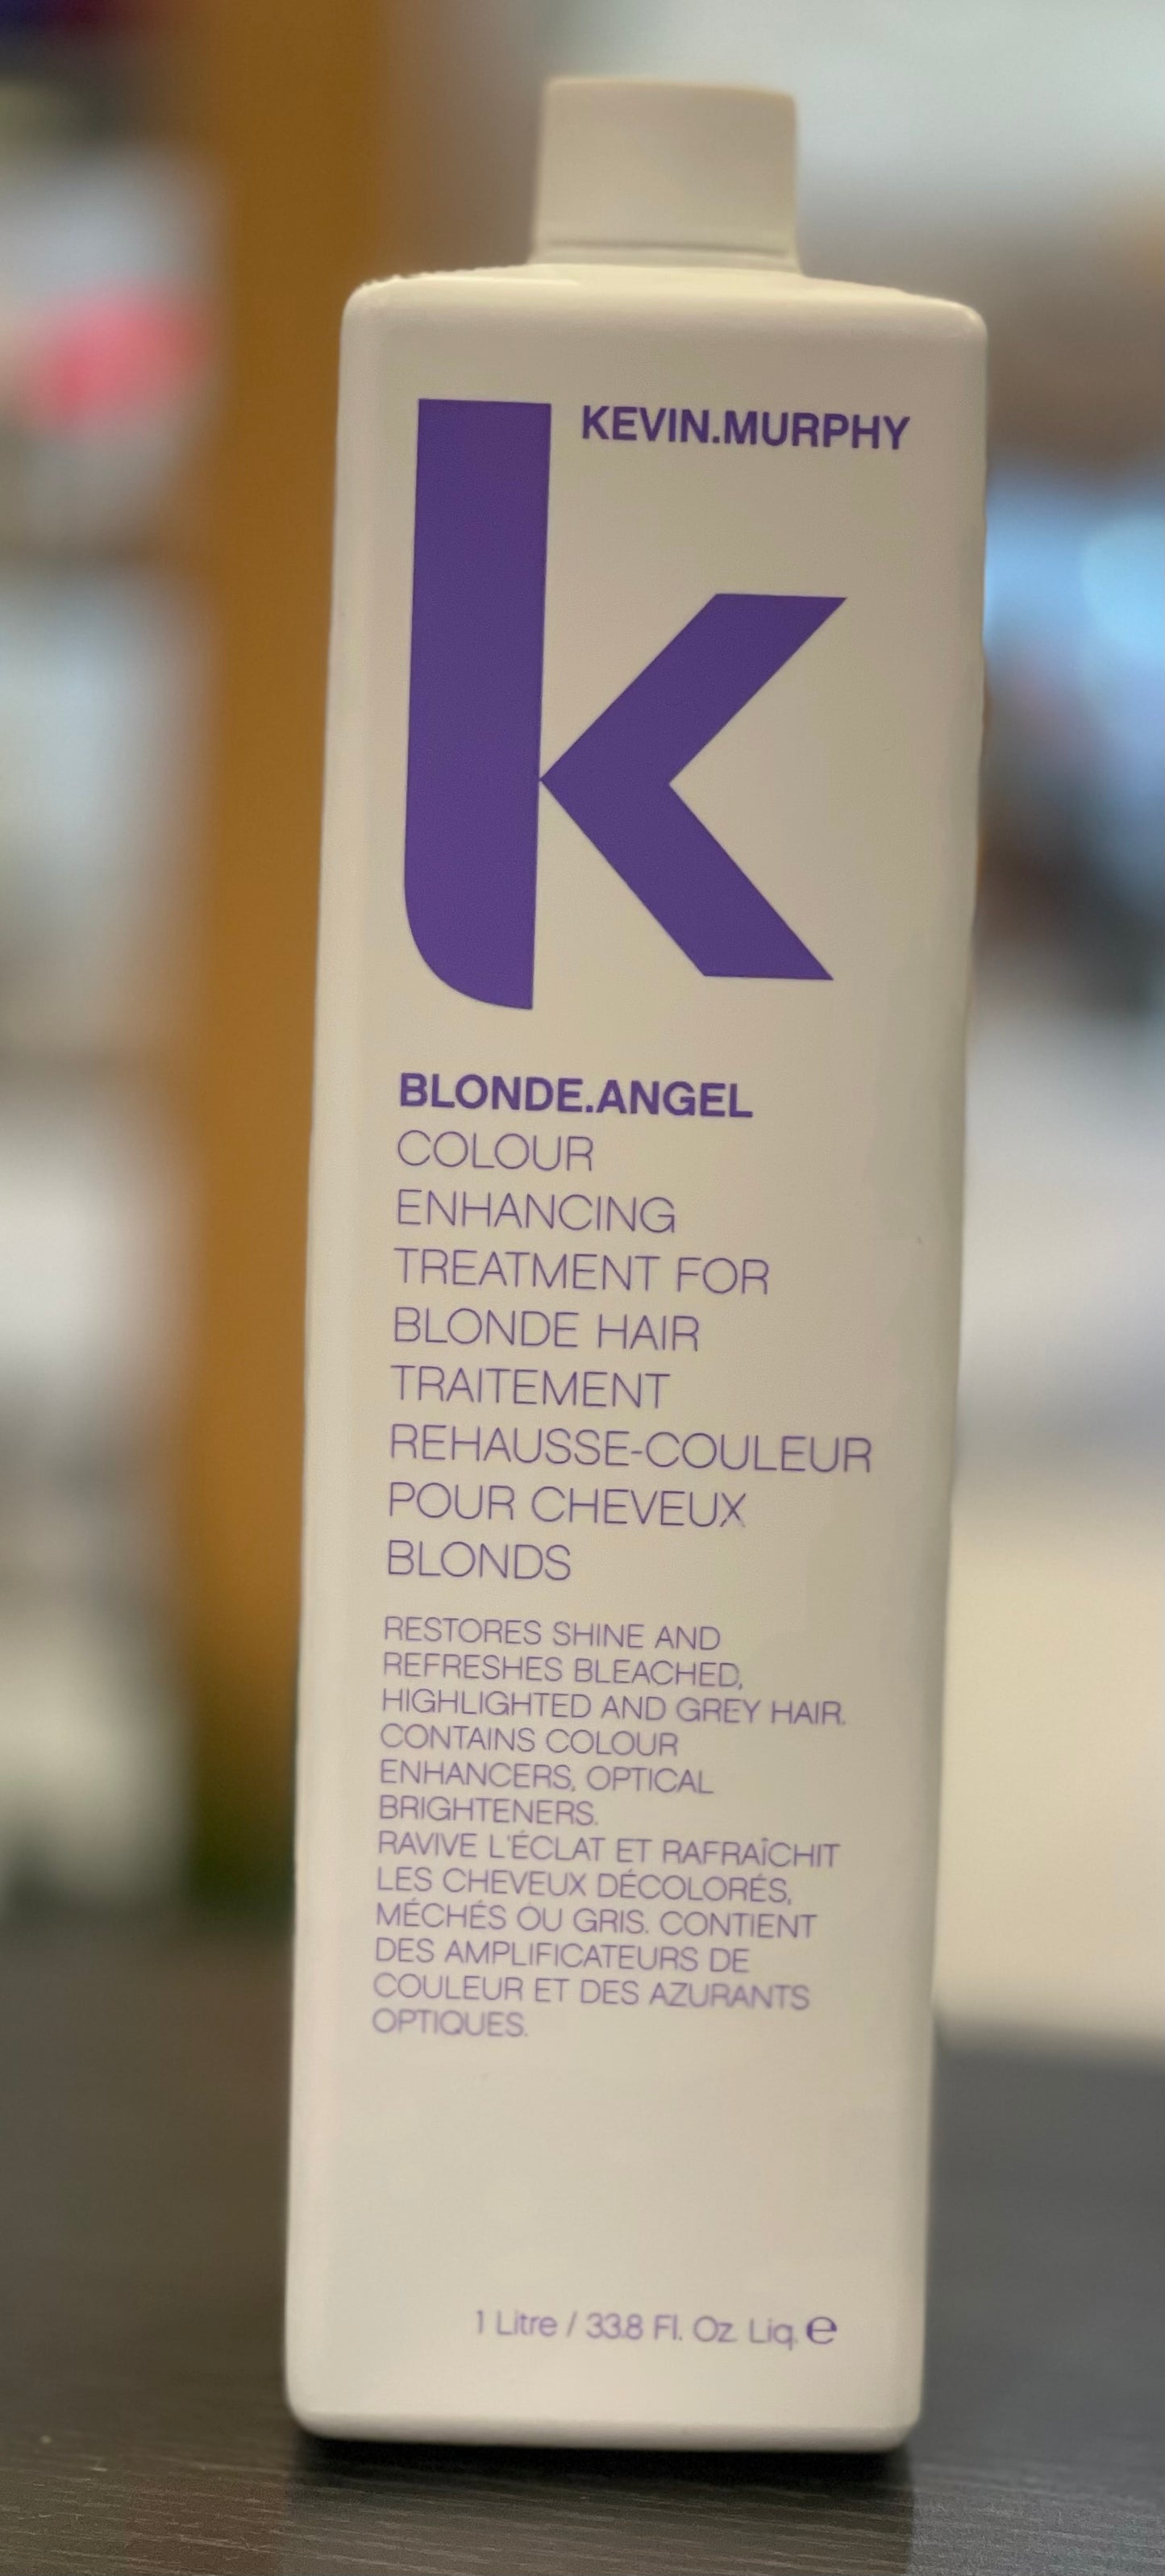 Kevin.Murphy - Blonde.Angel conditioner 33.8 fl. oz. / 1 L